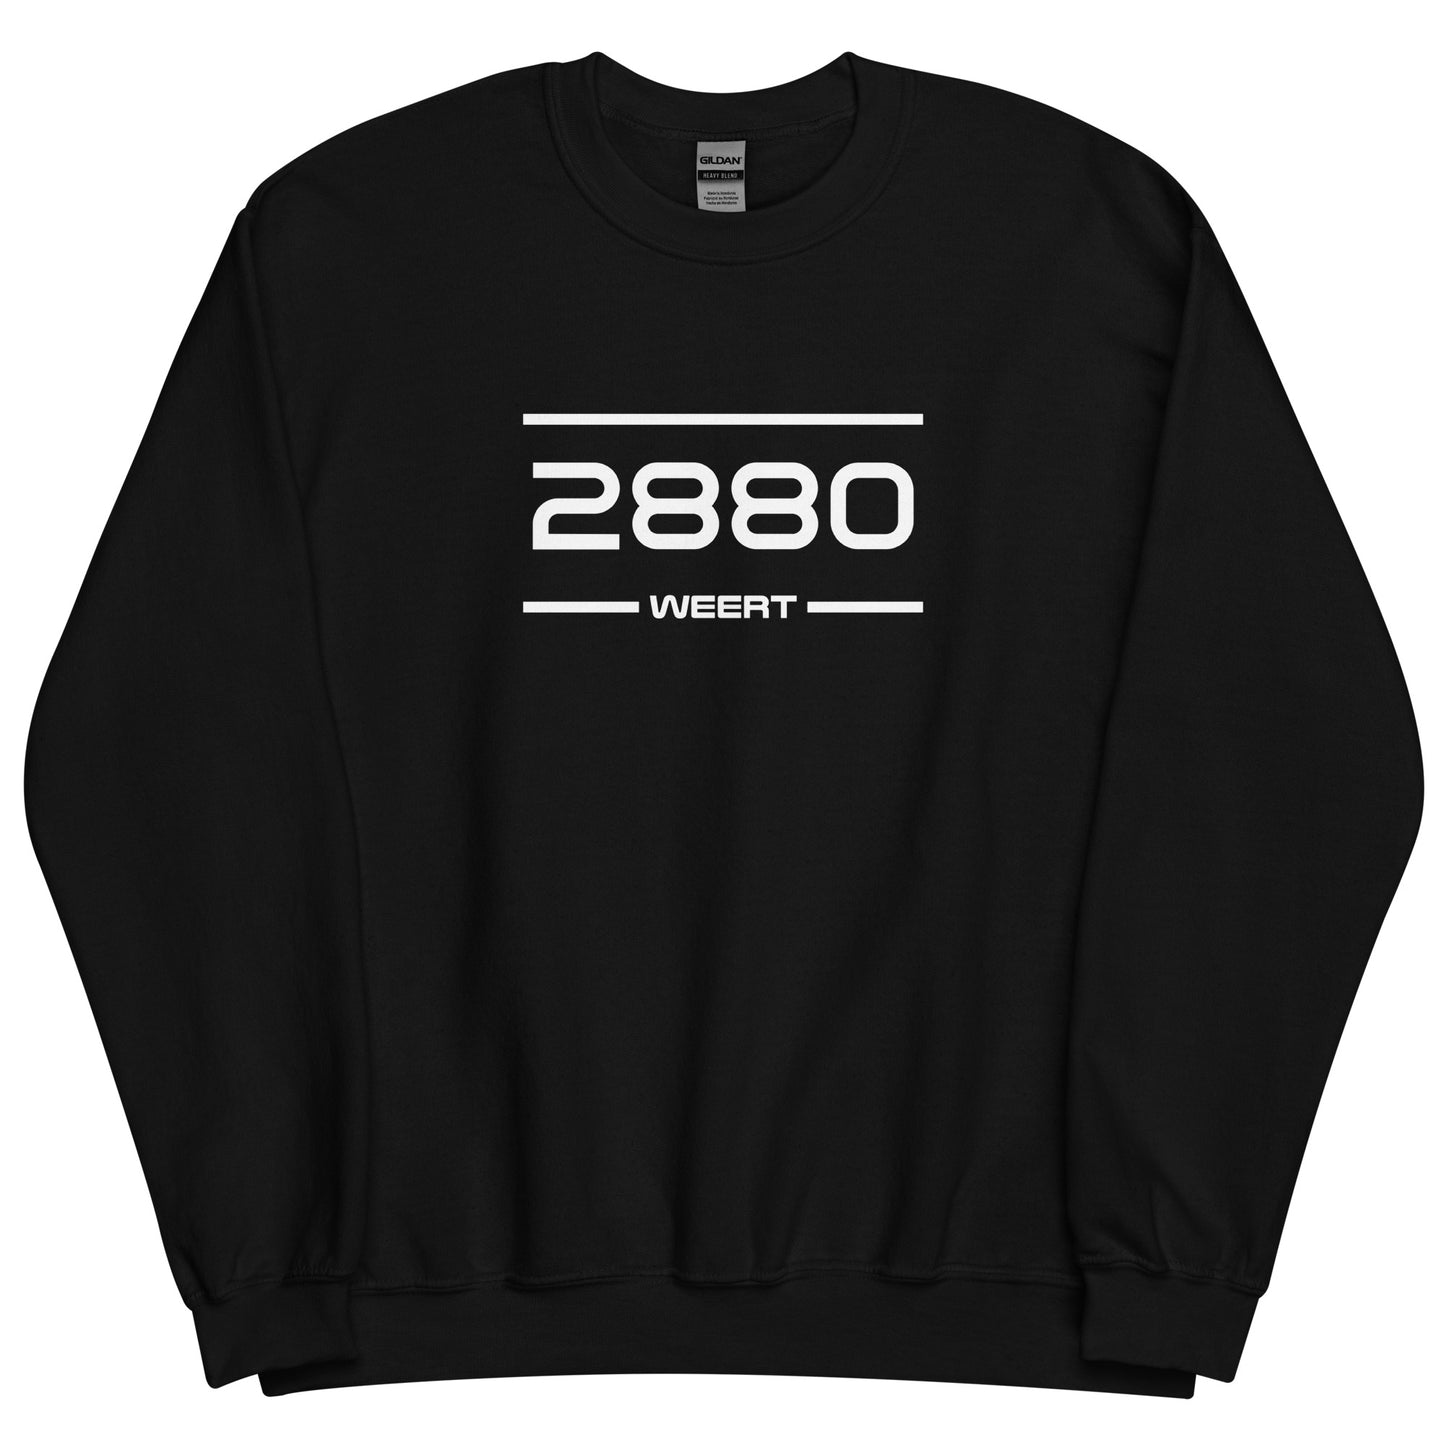 Sweater - 2880 - Weert (M/V)